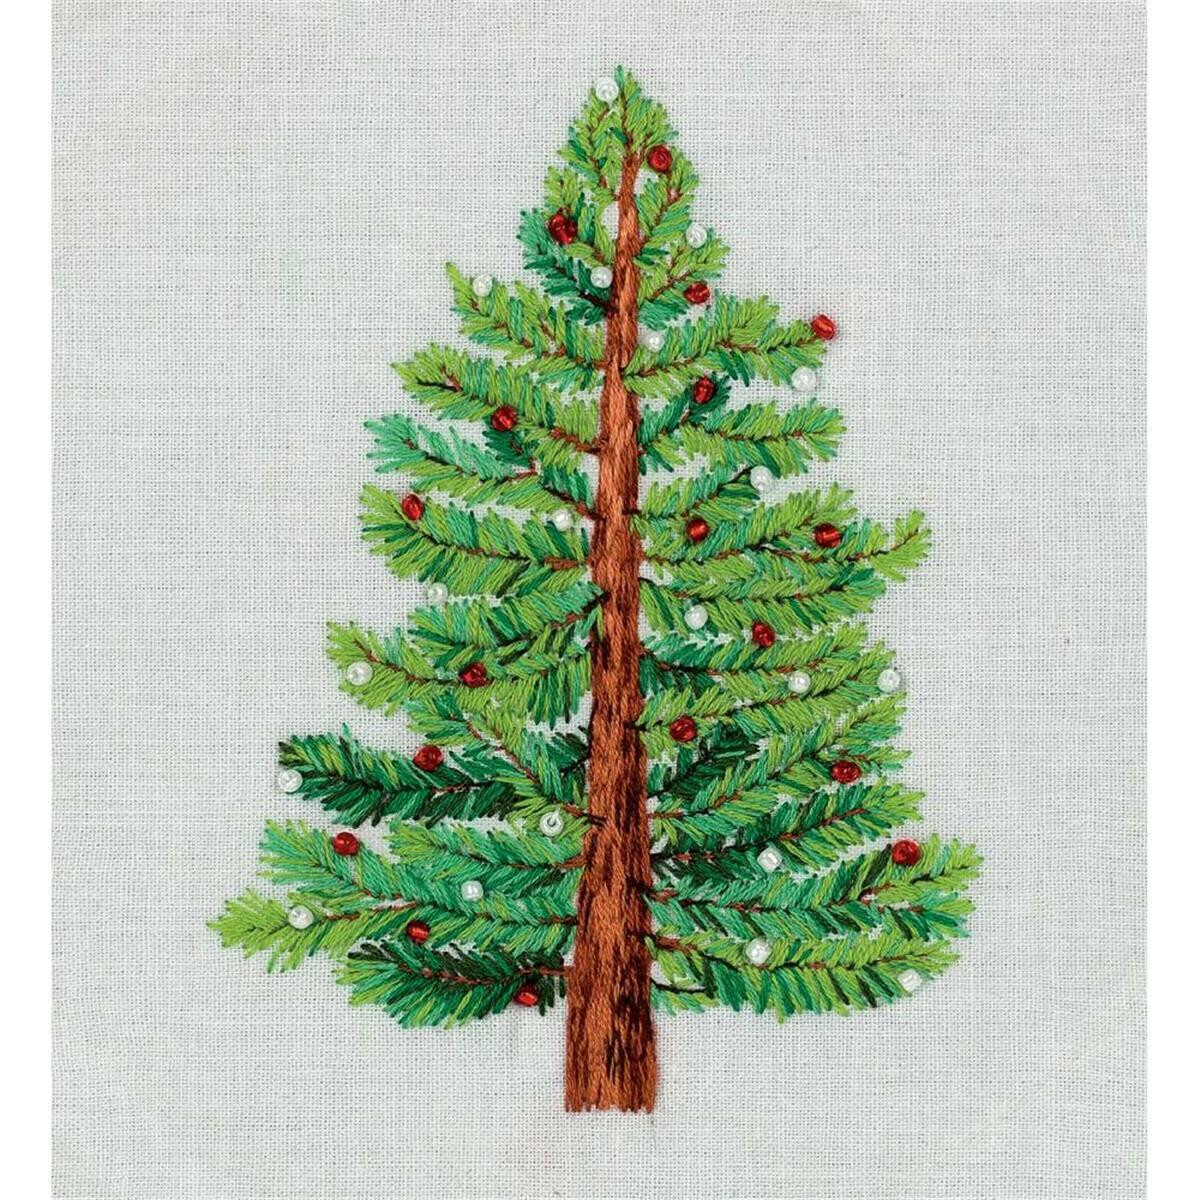 Panna stamped satin stitch kit "Christmas Tree"...